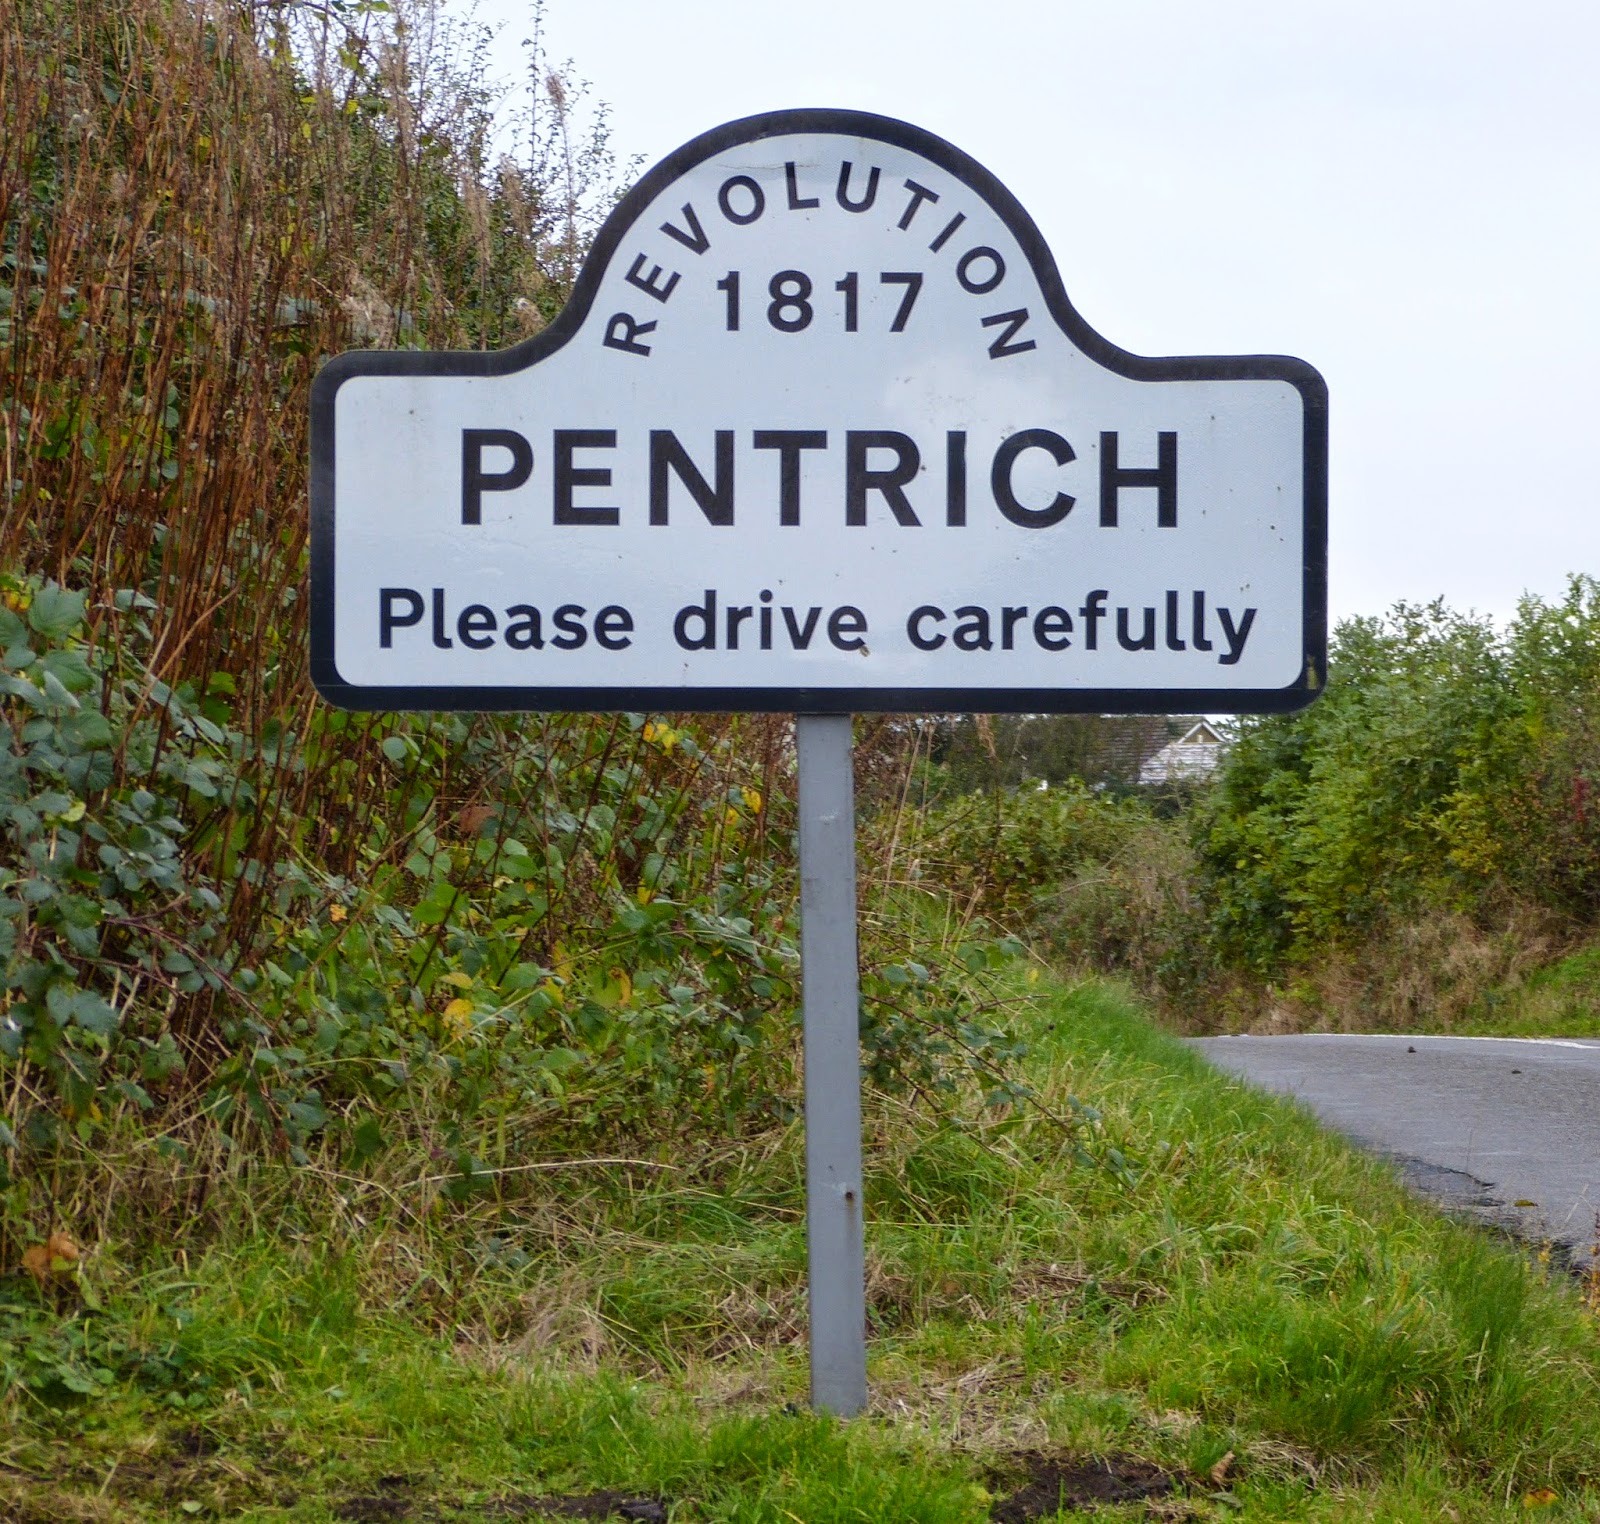 Road sign on entering Pentrich, Derbyshire